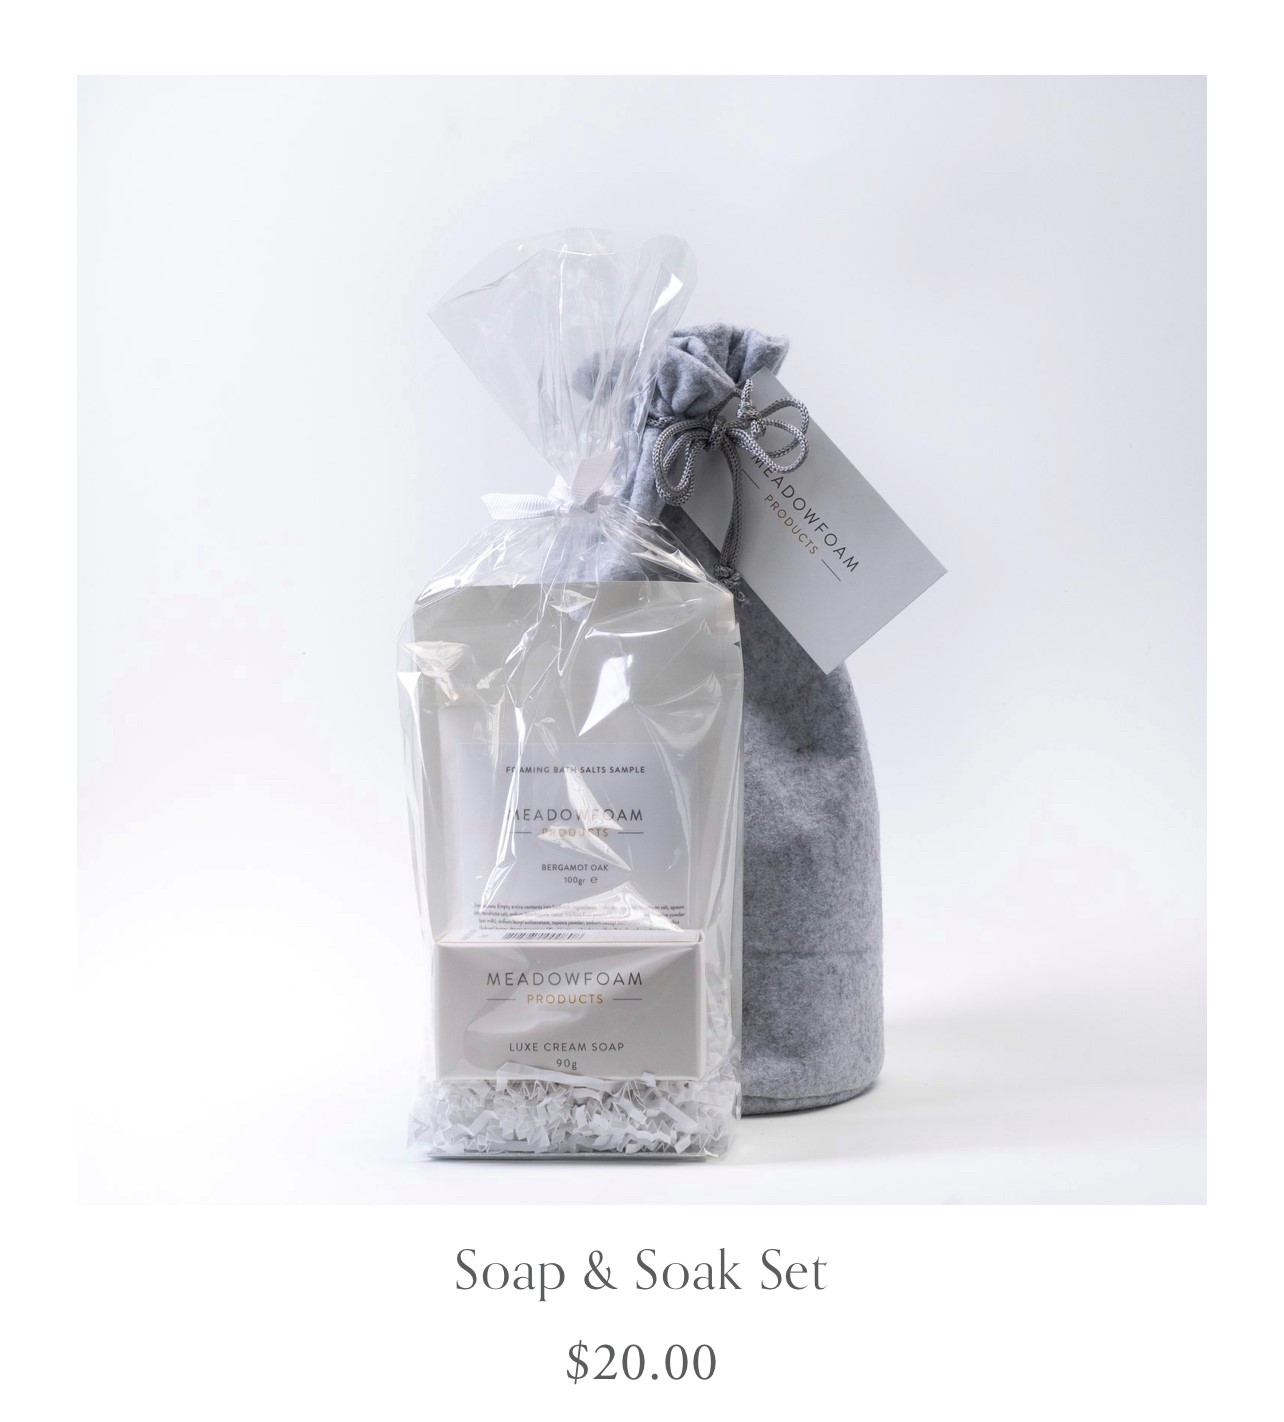 Soap & Soak gift set